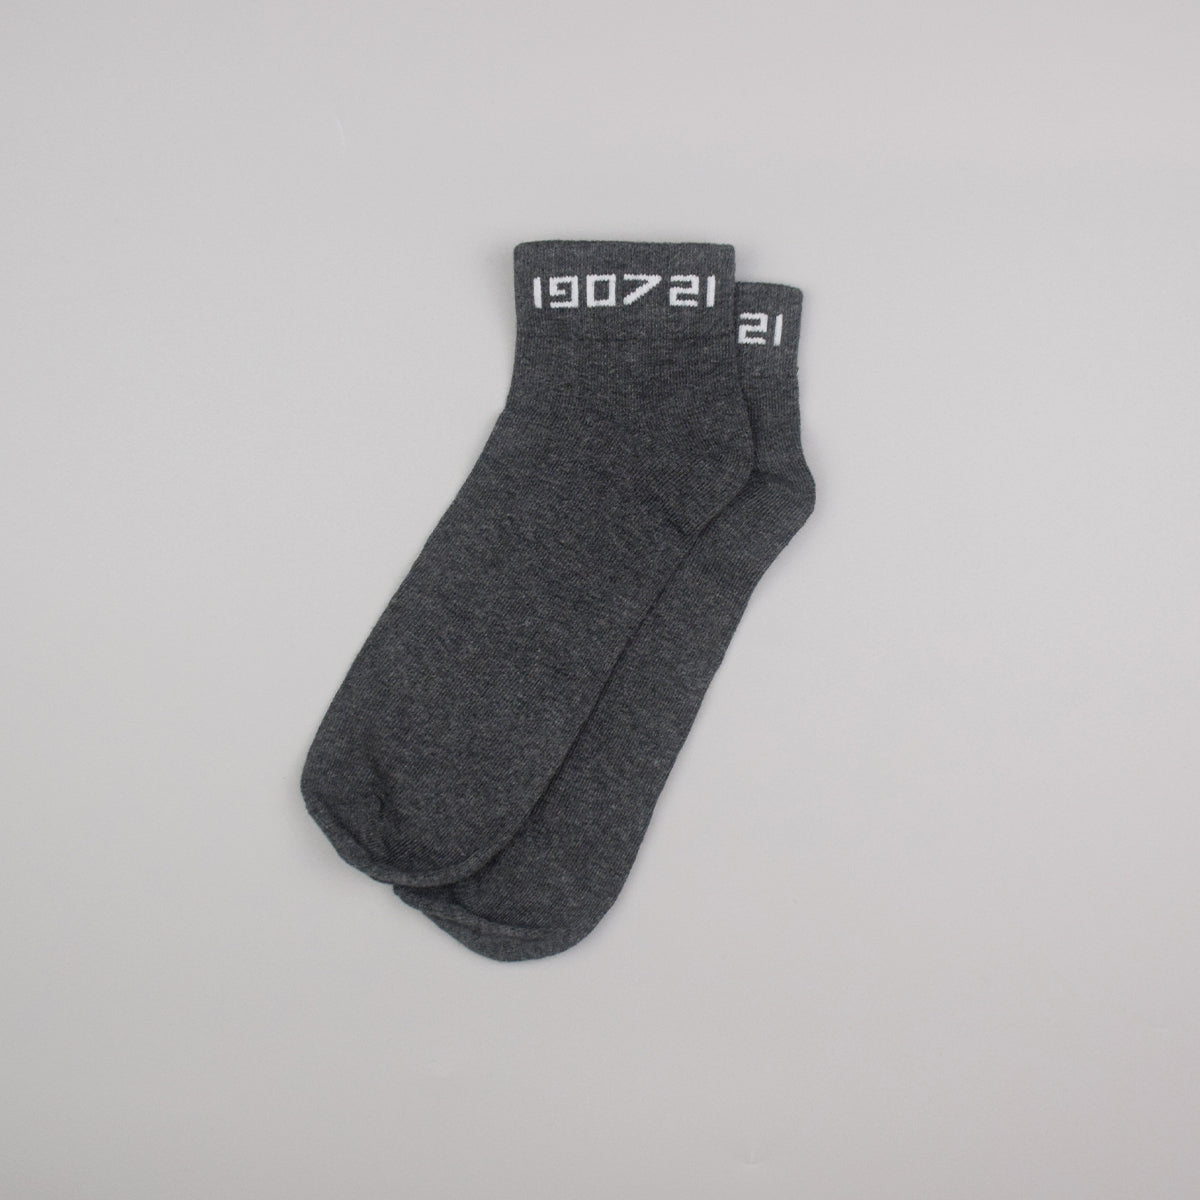 “190721” 8CM ANKLE SOCKS 「190721」8cm短襪